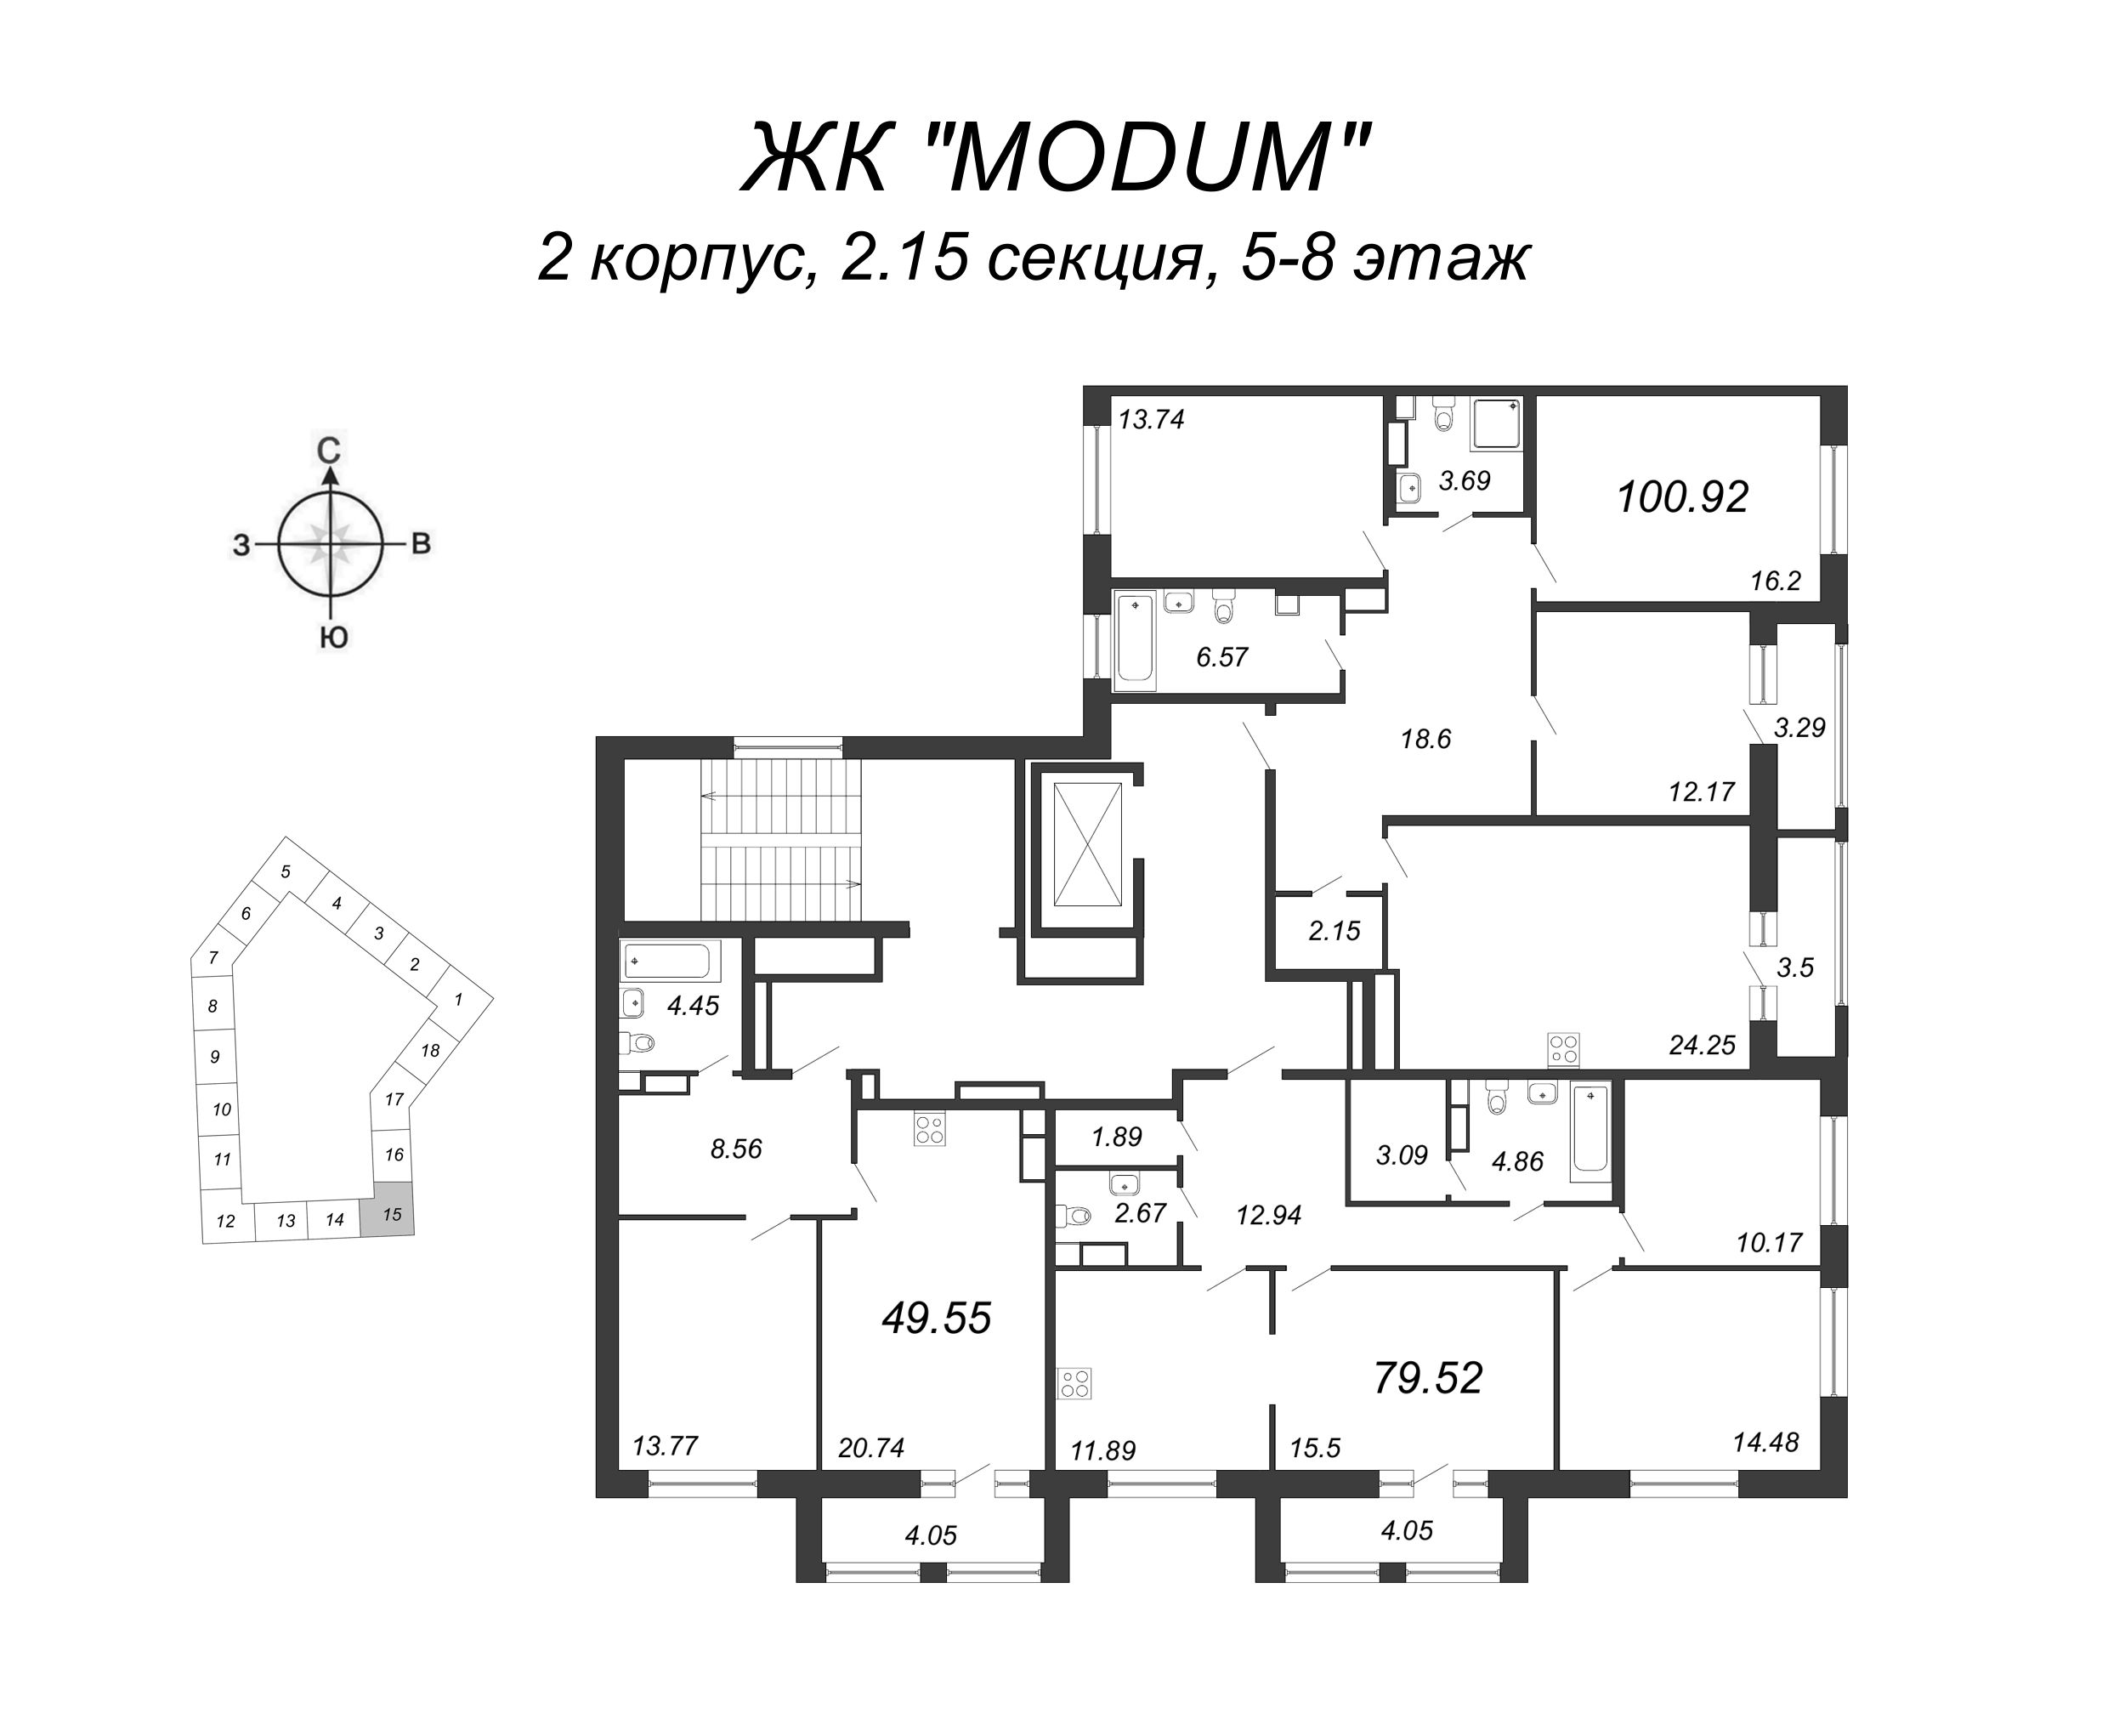 4-комнатная (Евро) квартира, 100.92 м² - планировка этажа